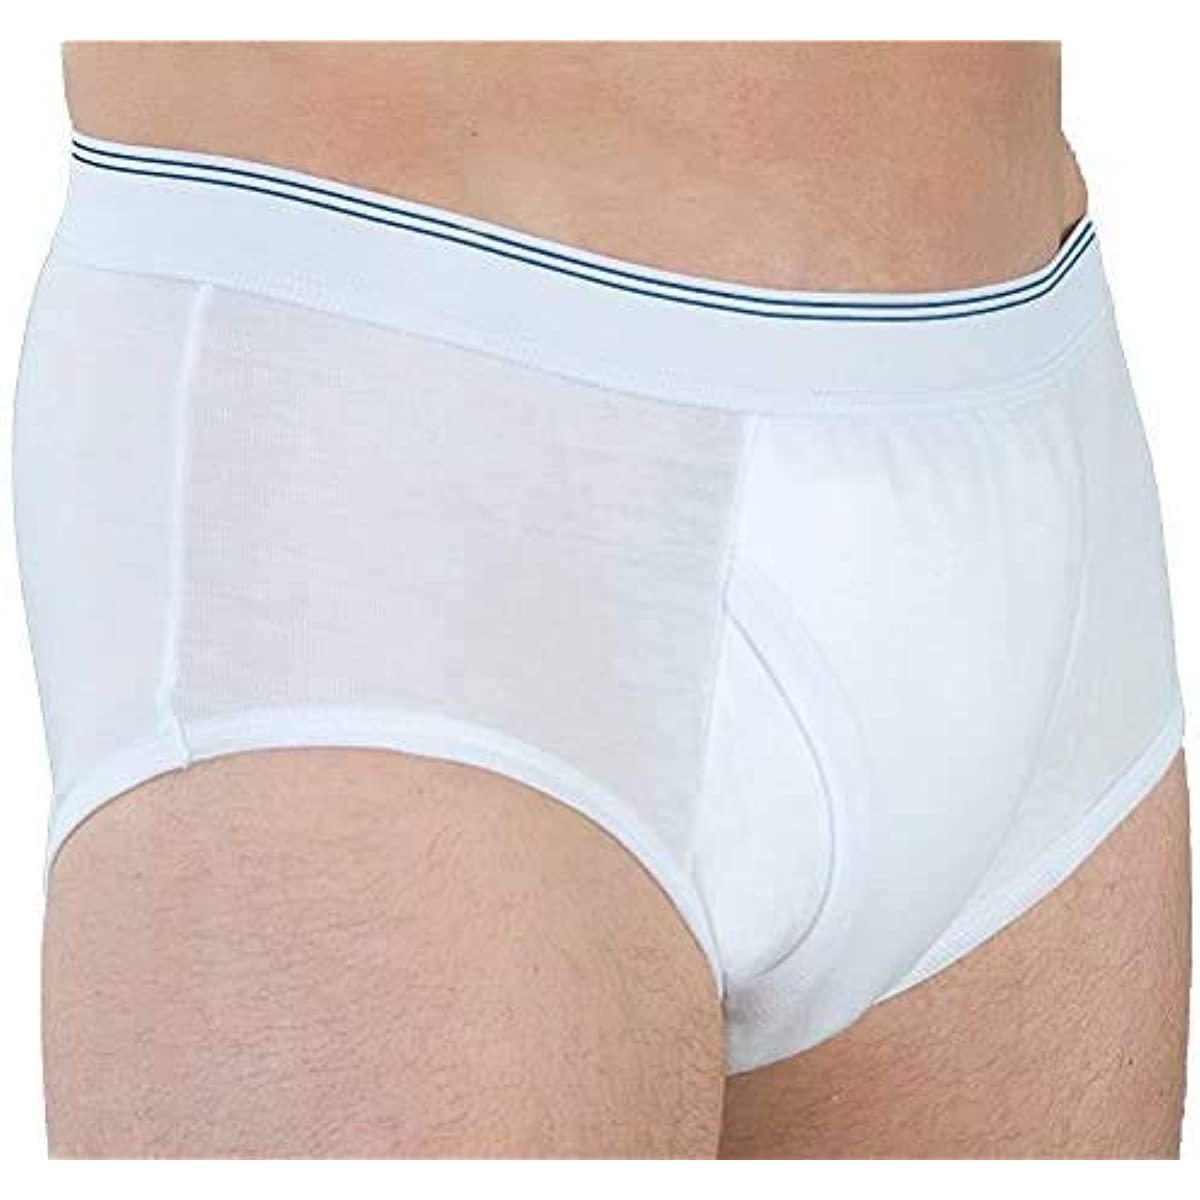  Men's Washable Incontinence Shorts Open Underwear